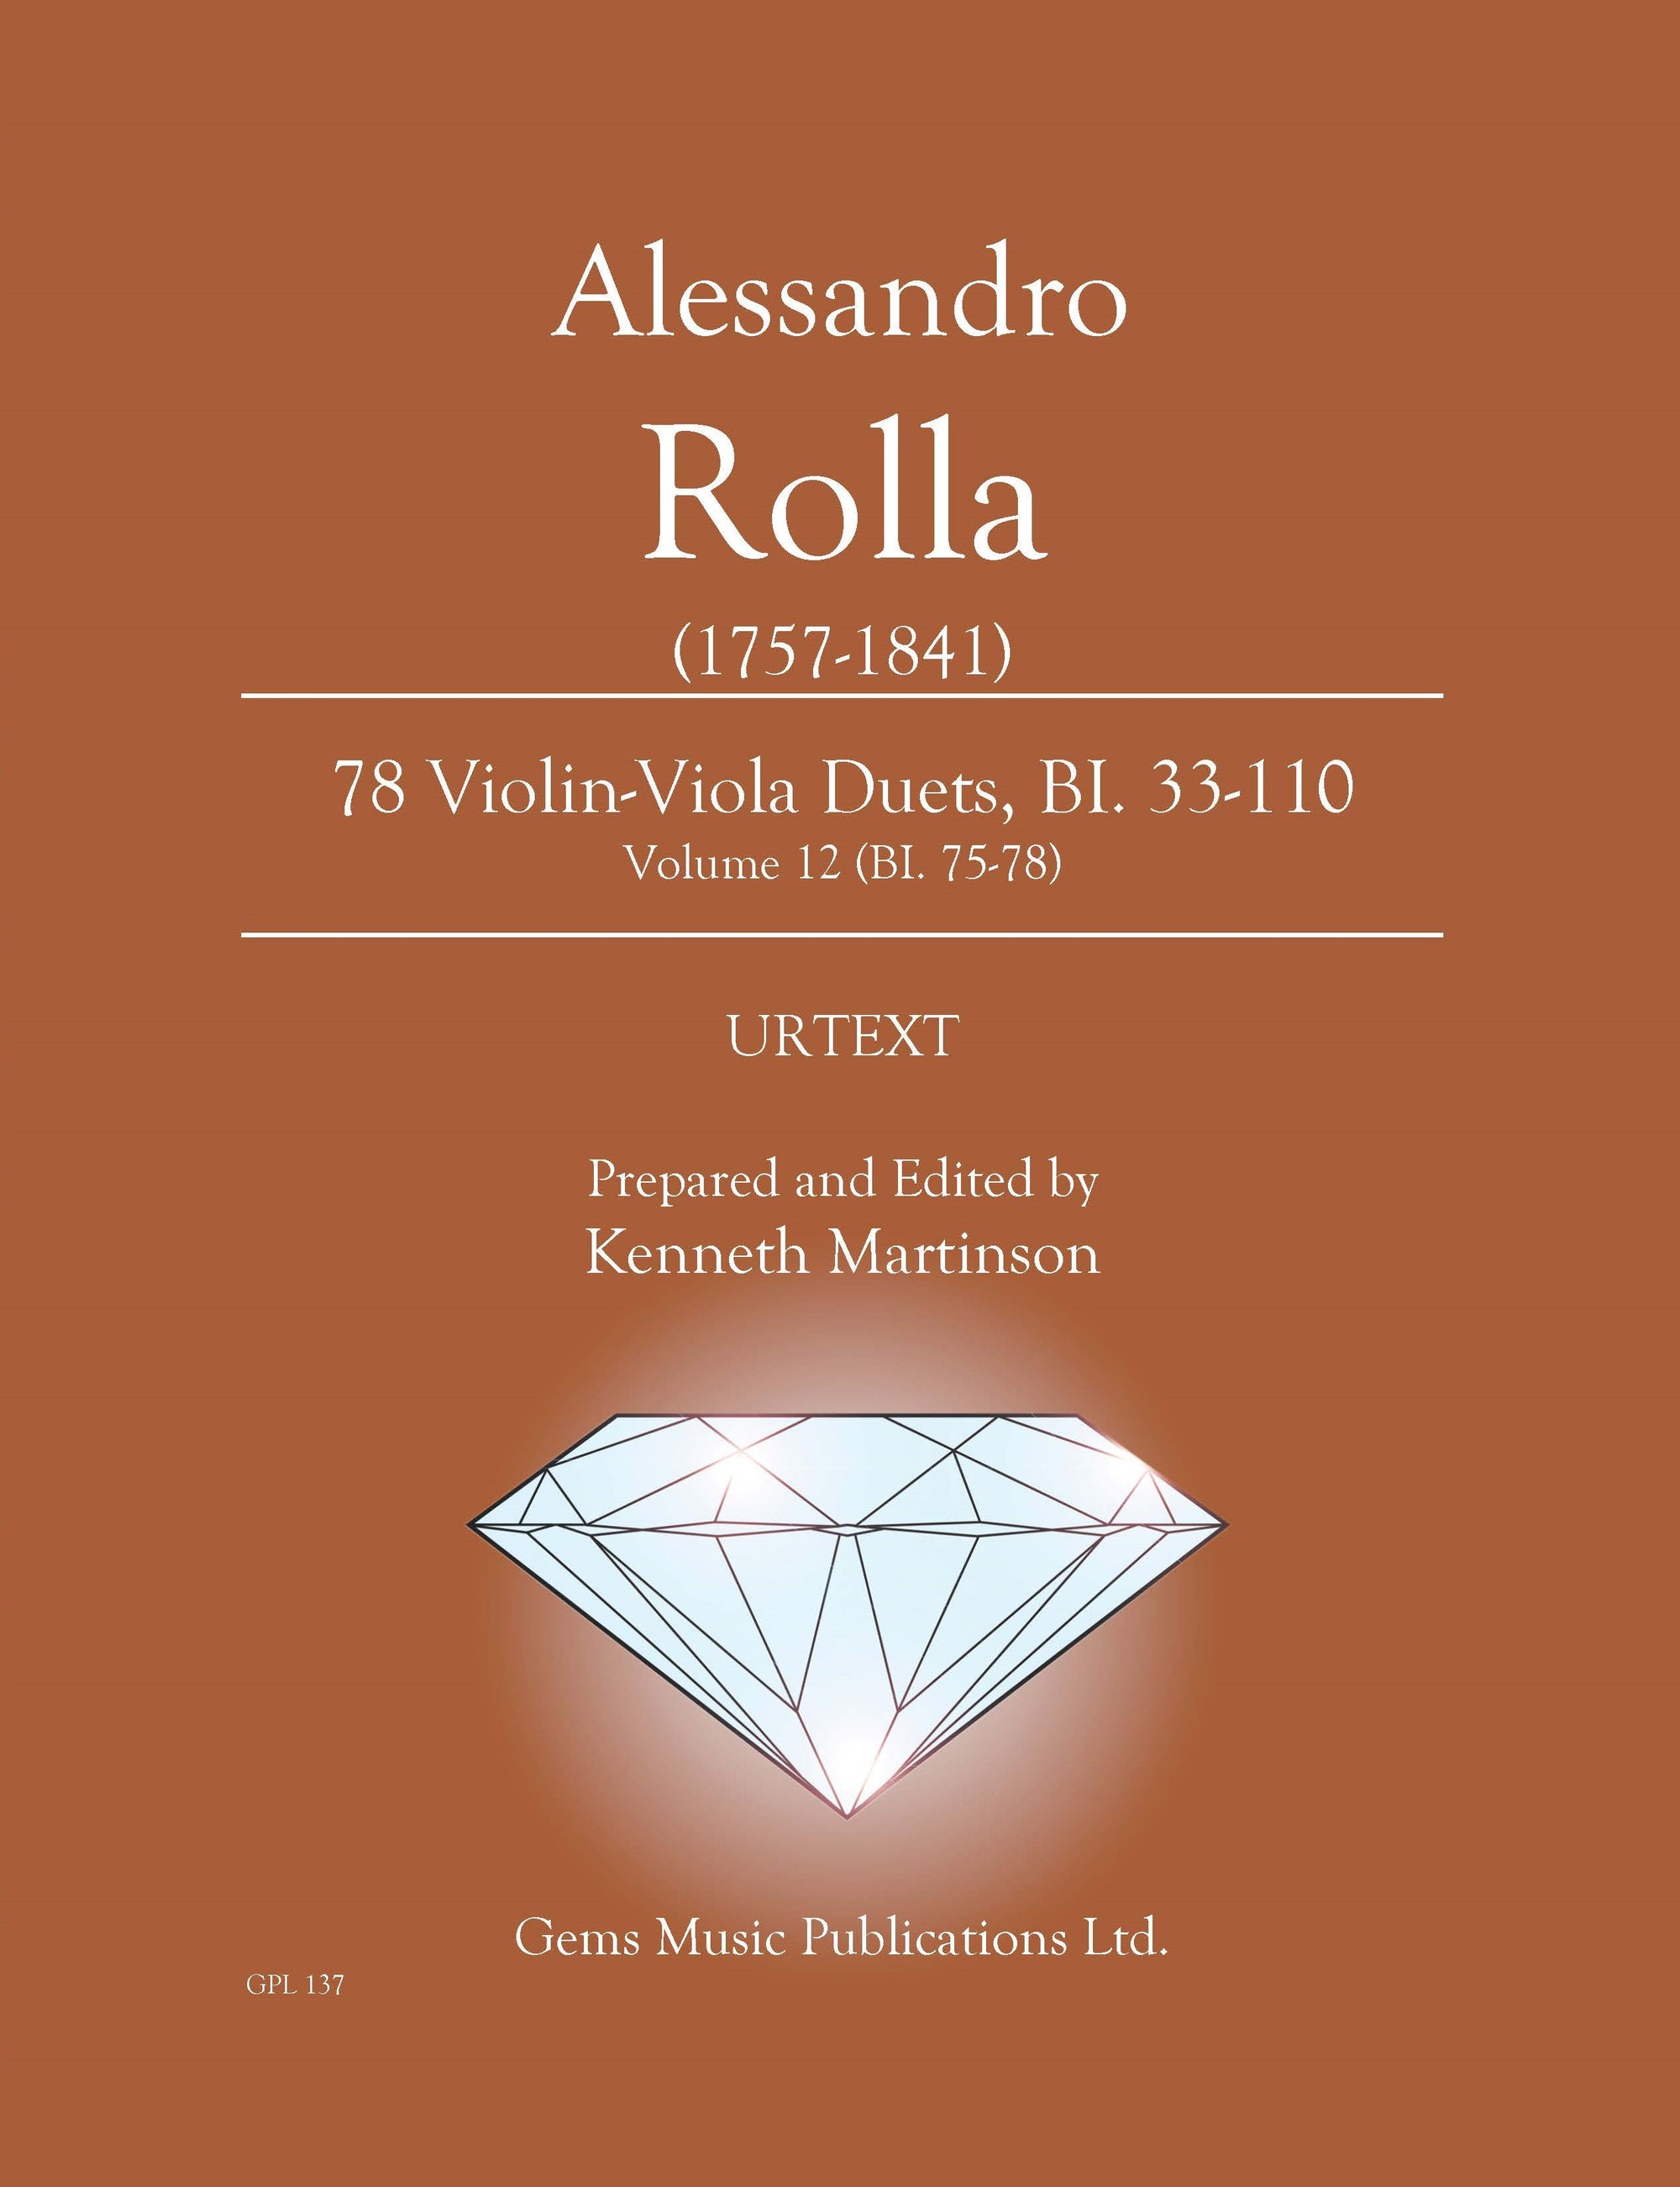 Rolla: Violin-Viola Duets - Volume 12 (BI. 75-78)